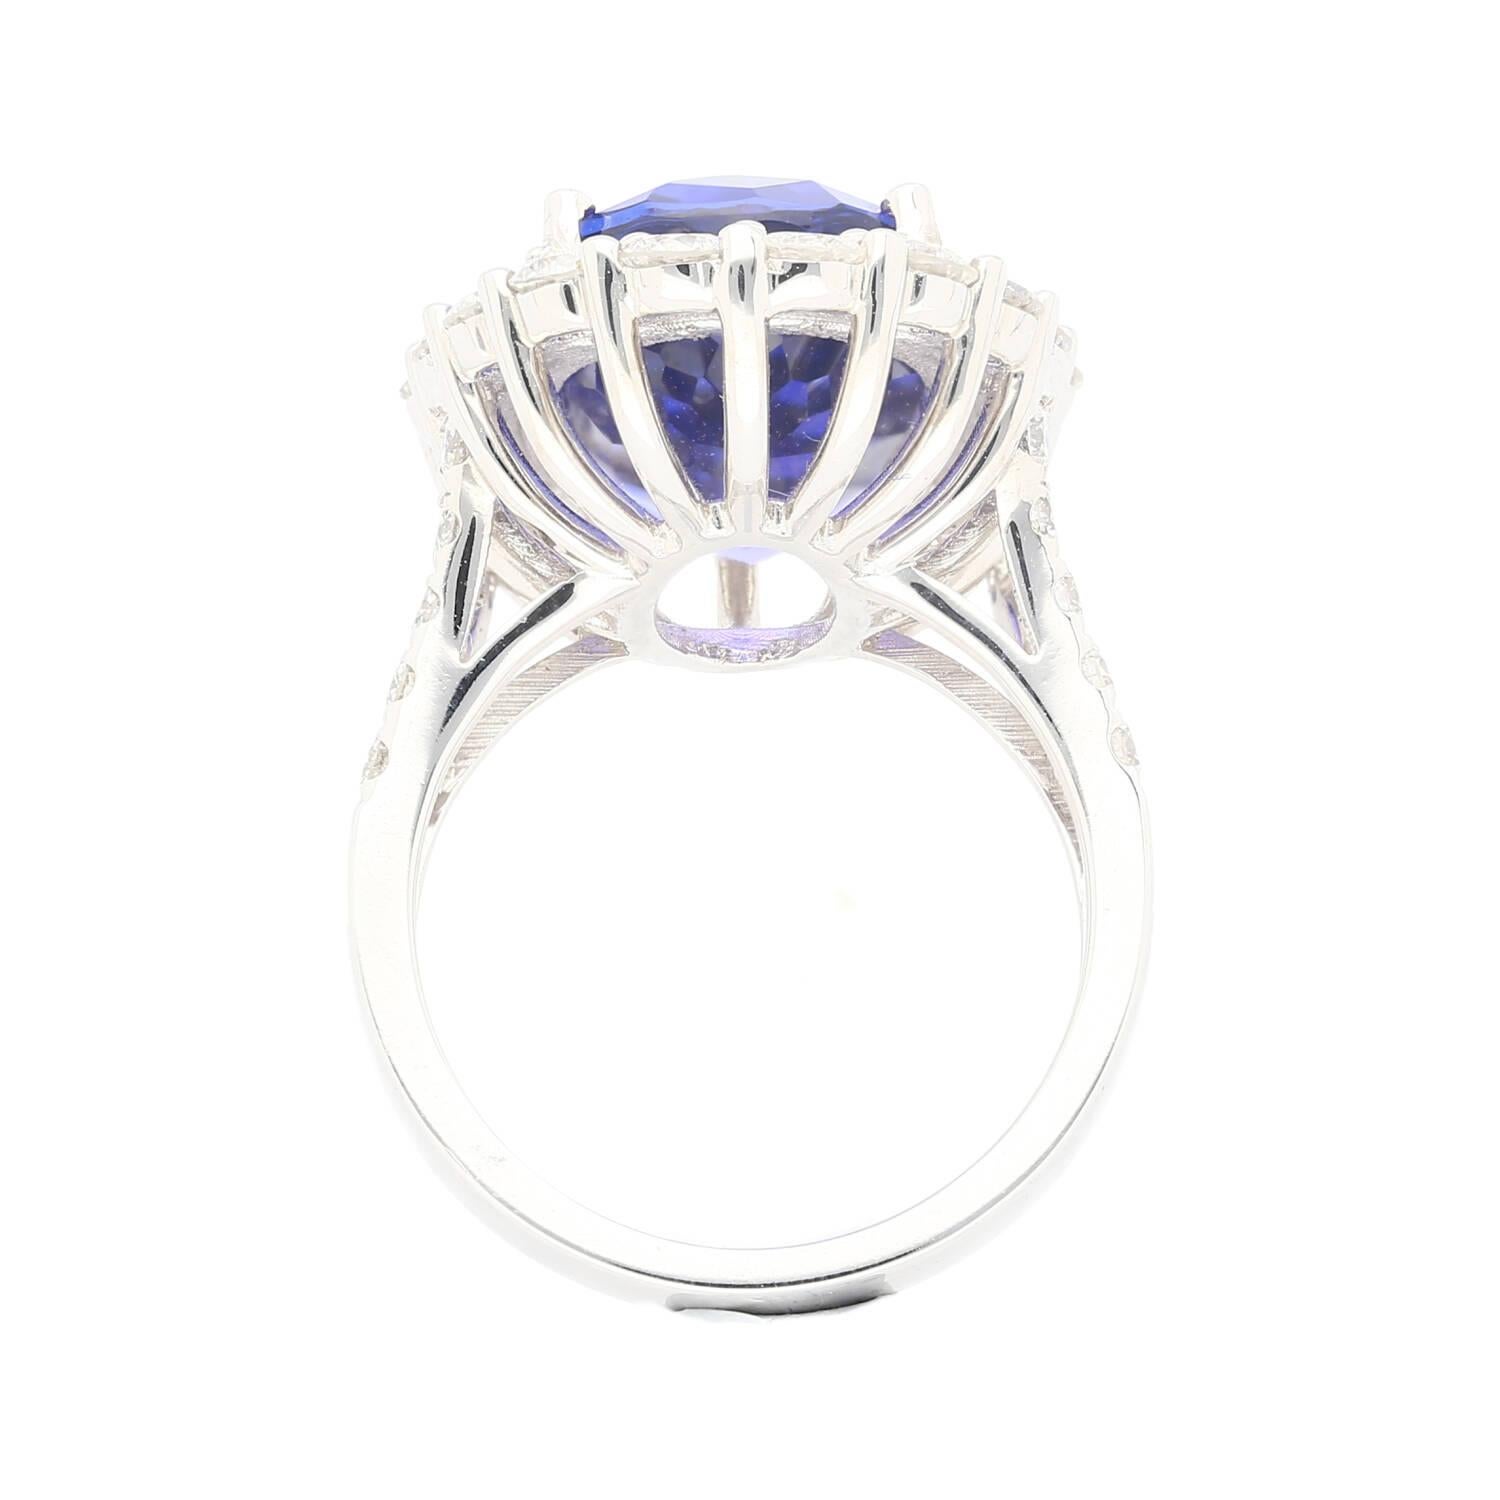 15.46 Carat Oval Cut Fine Tanzanite and Diamond Halo Ring in 18k White Gold For Sale 3